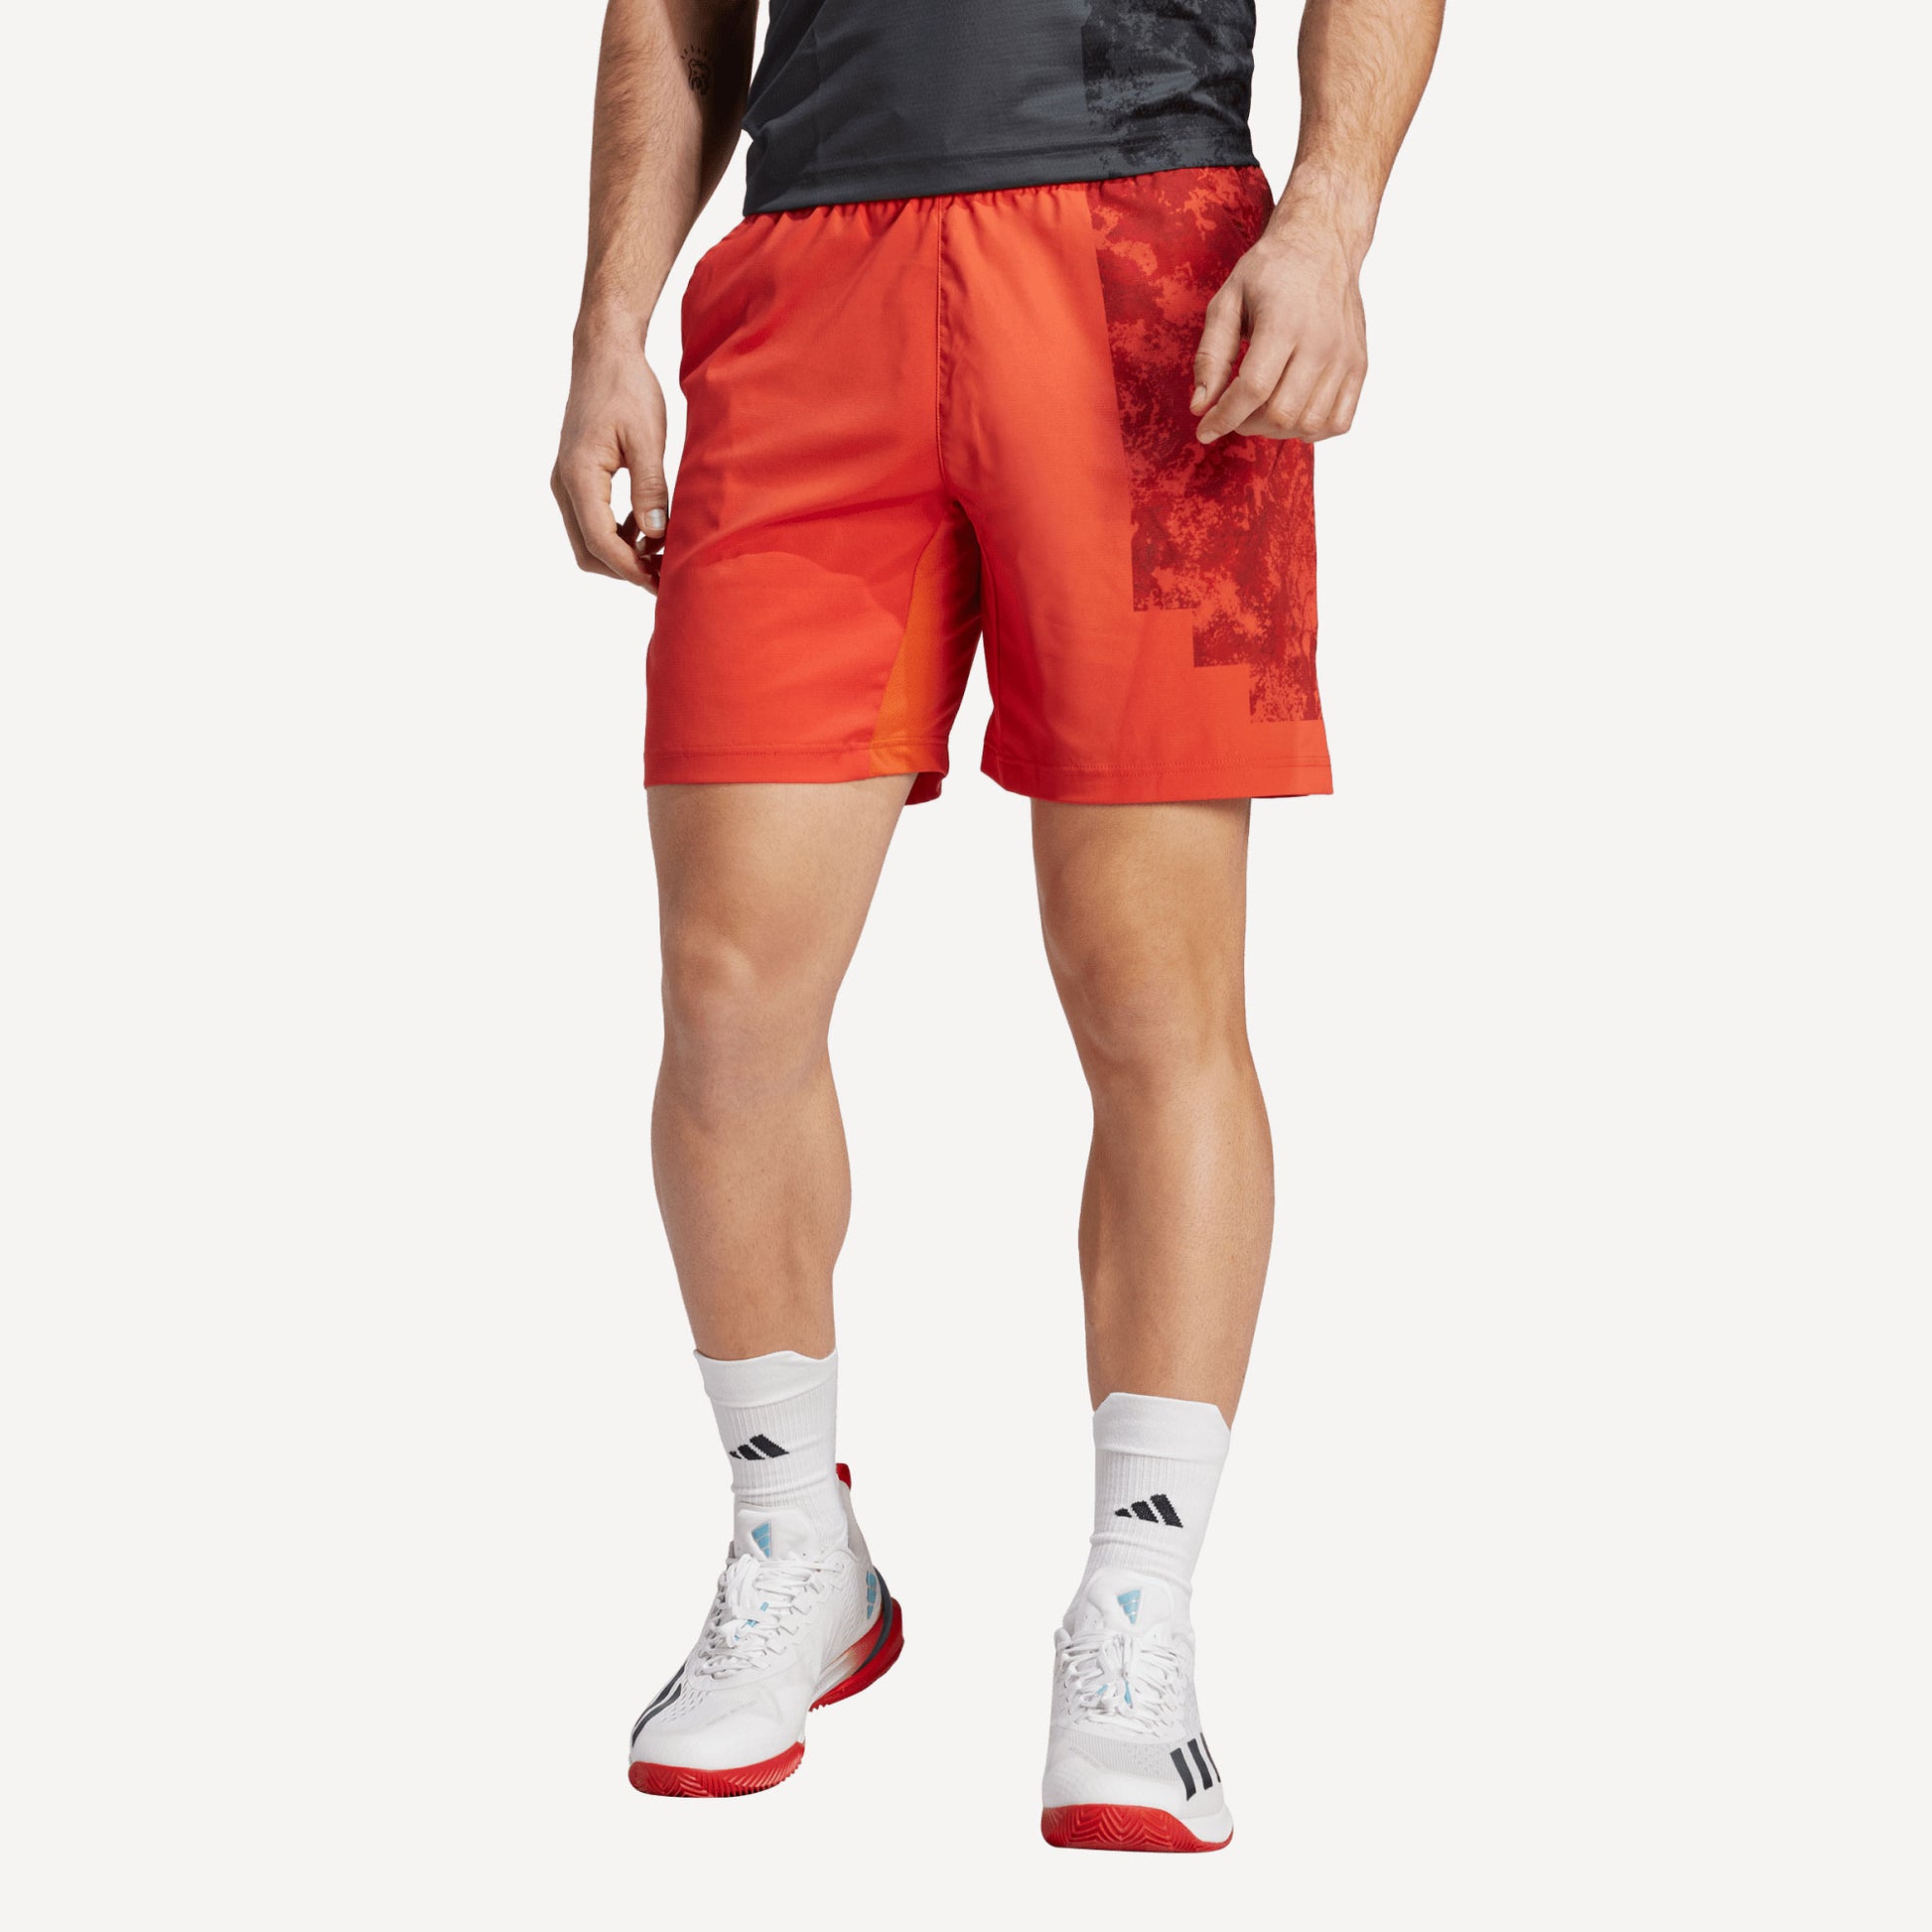 adidas Paris Ergo Men's 7-Inch Tennis Shorts Red (1)